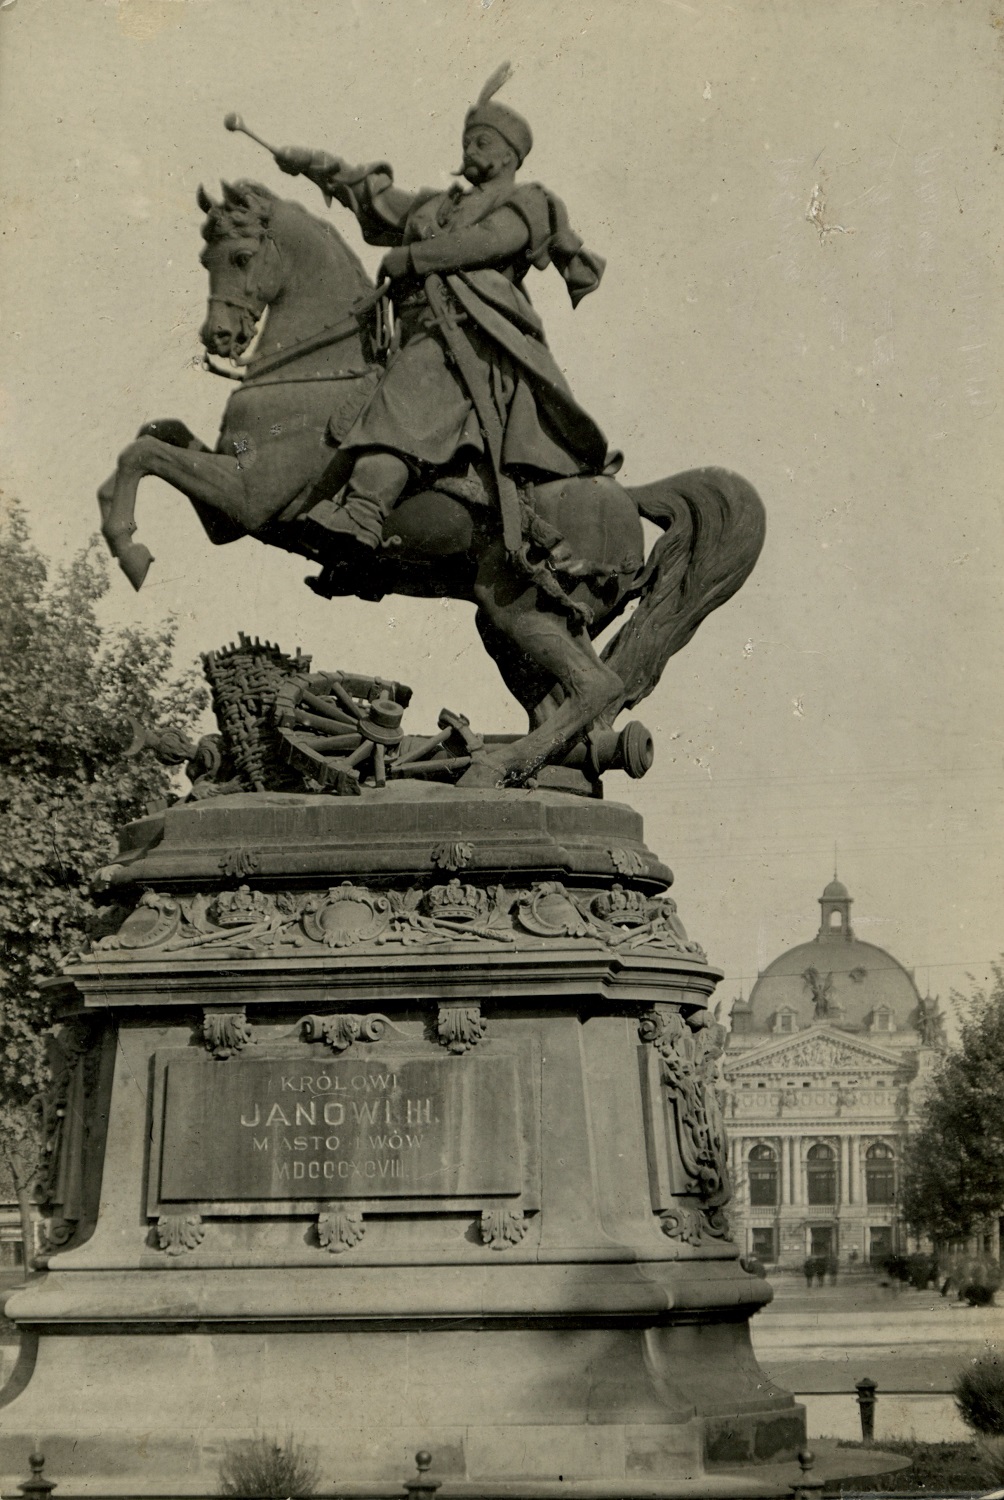 The monument to Jan III Sobieski